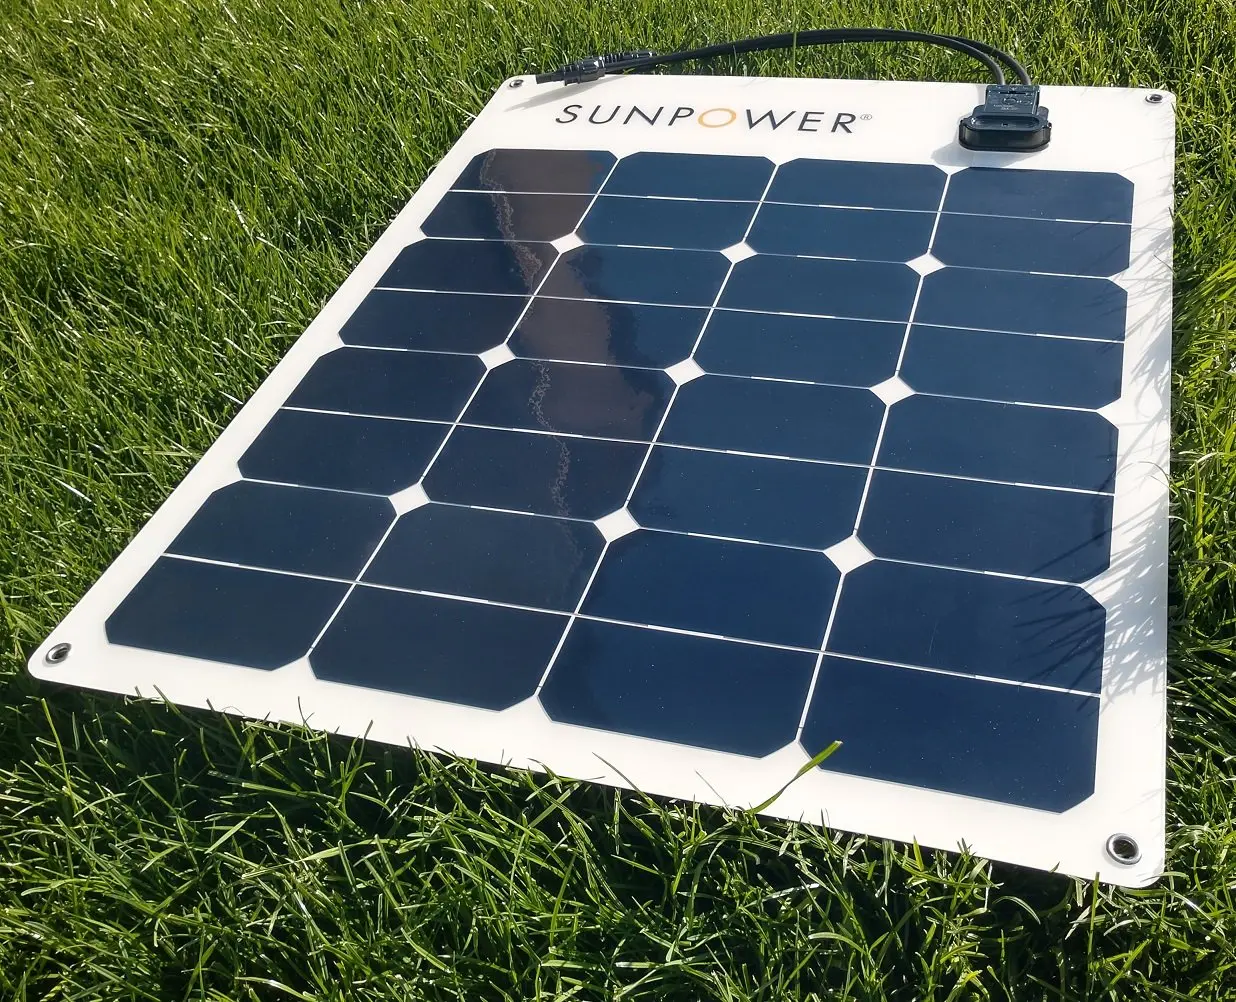 buy sunpower solar panels - Does SunPower sell solar panels